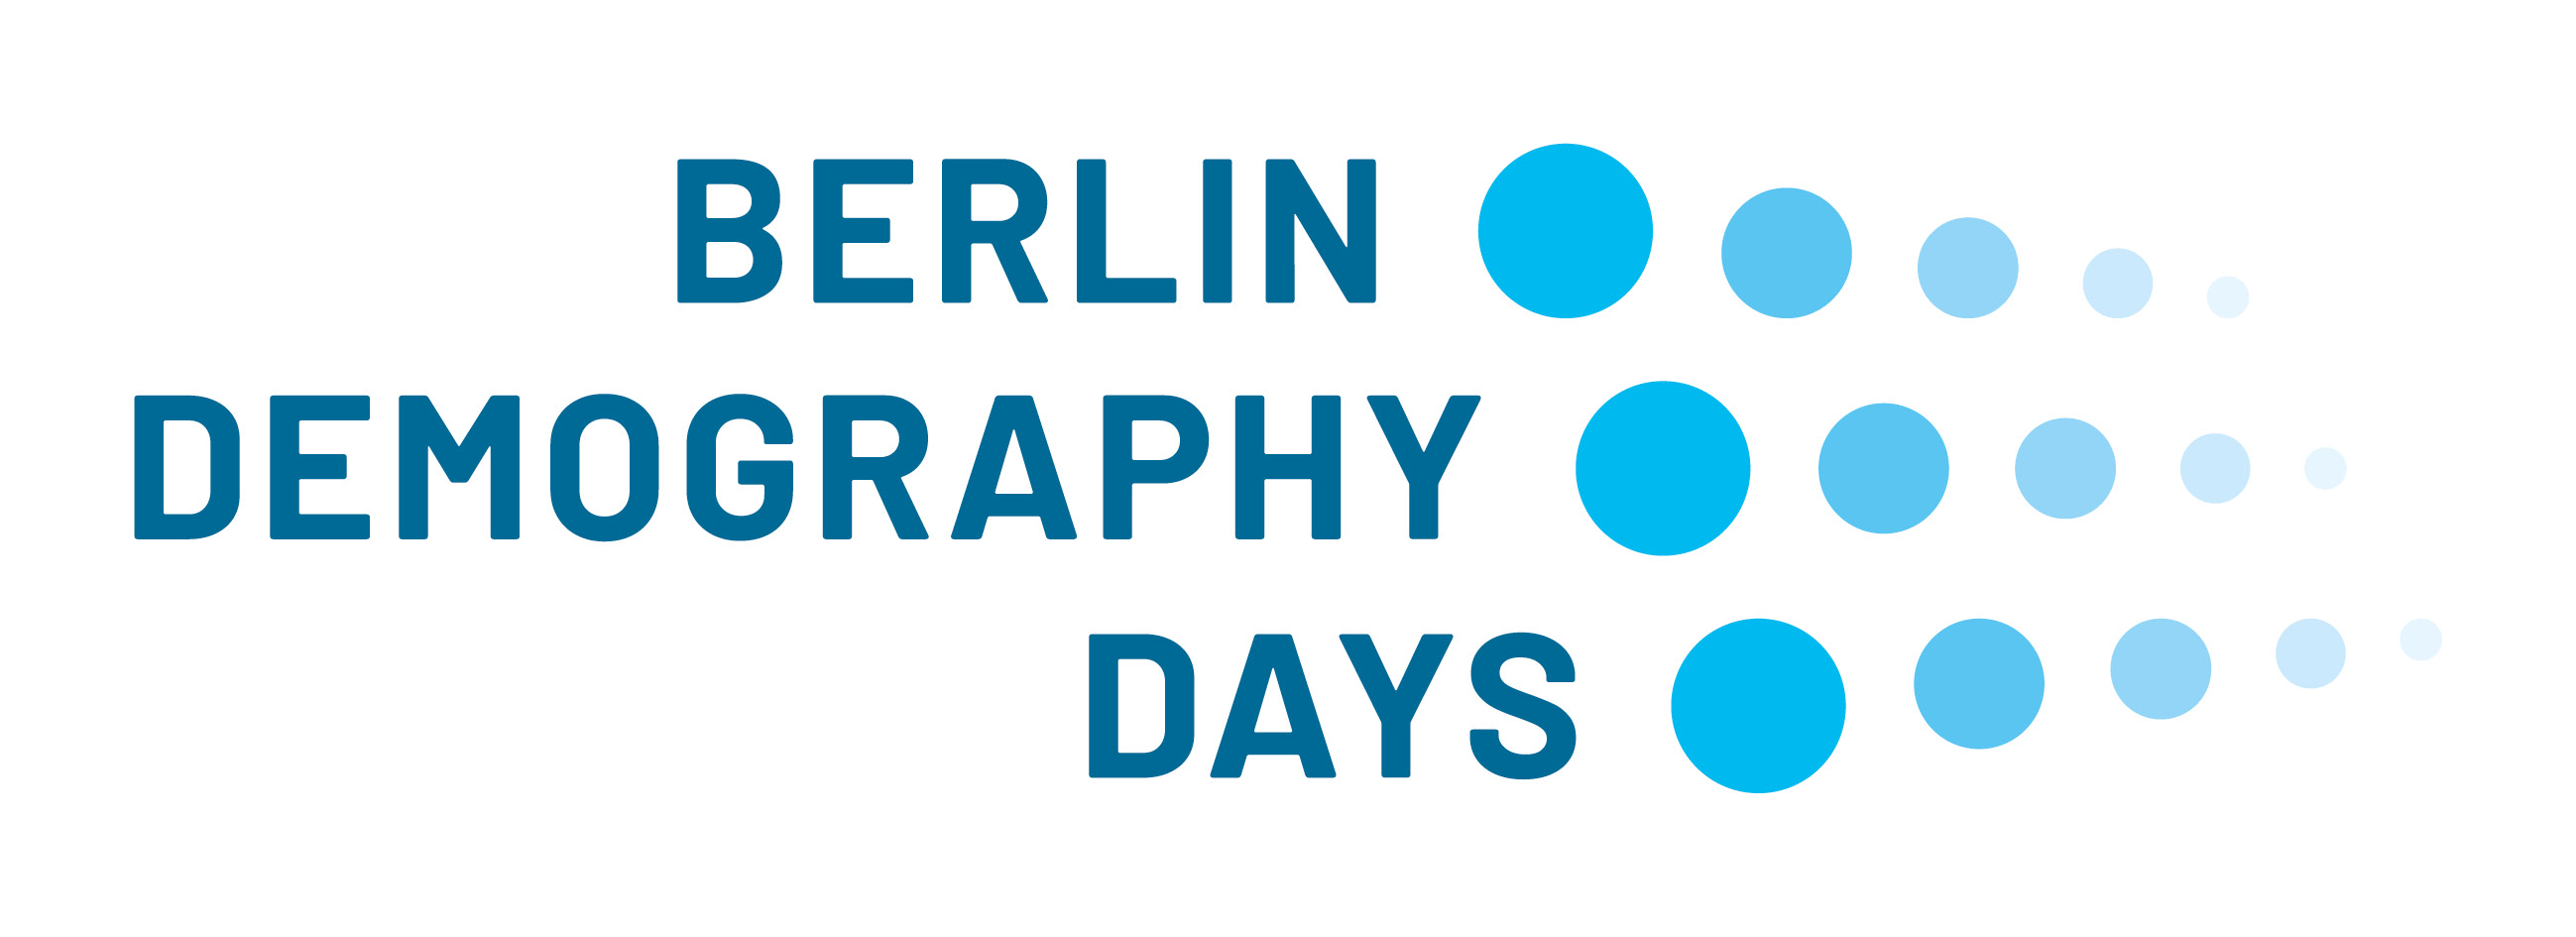 Berlin Demography Days Logo